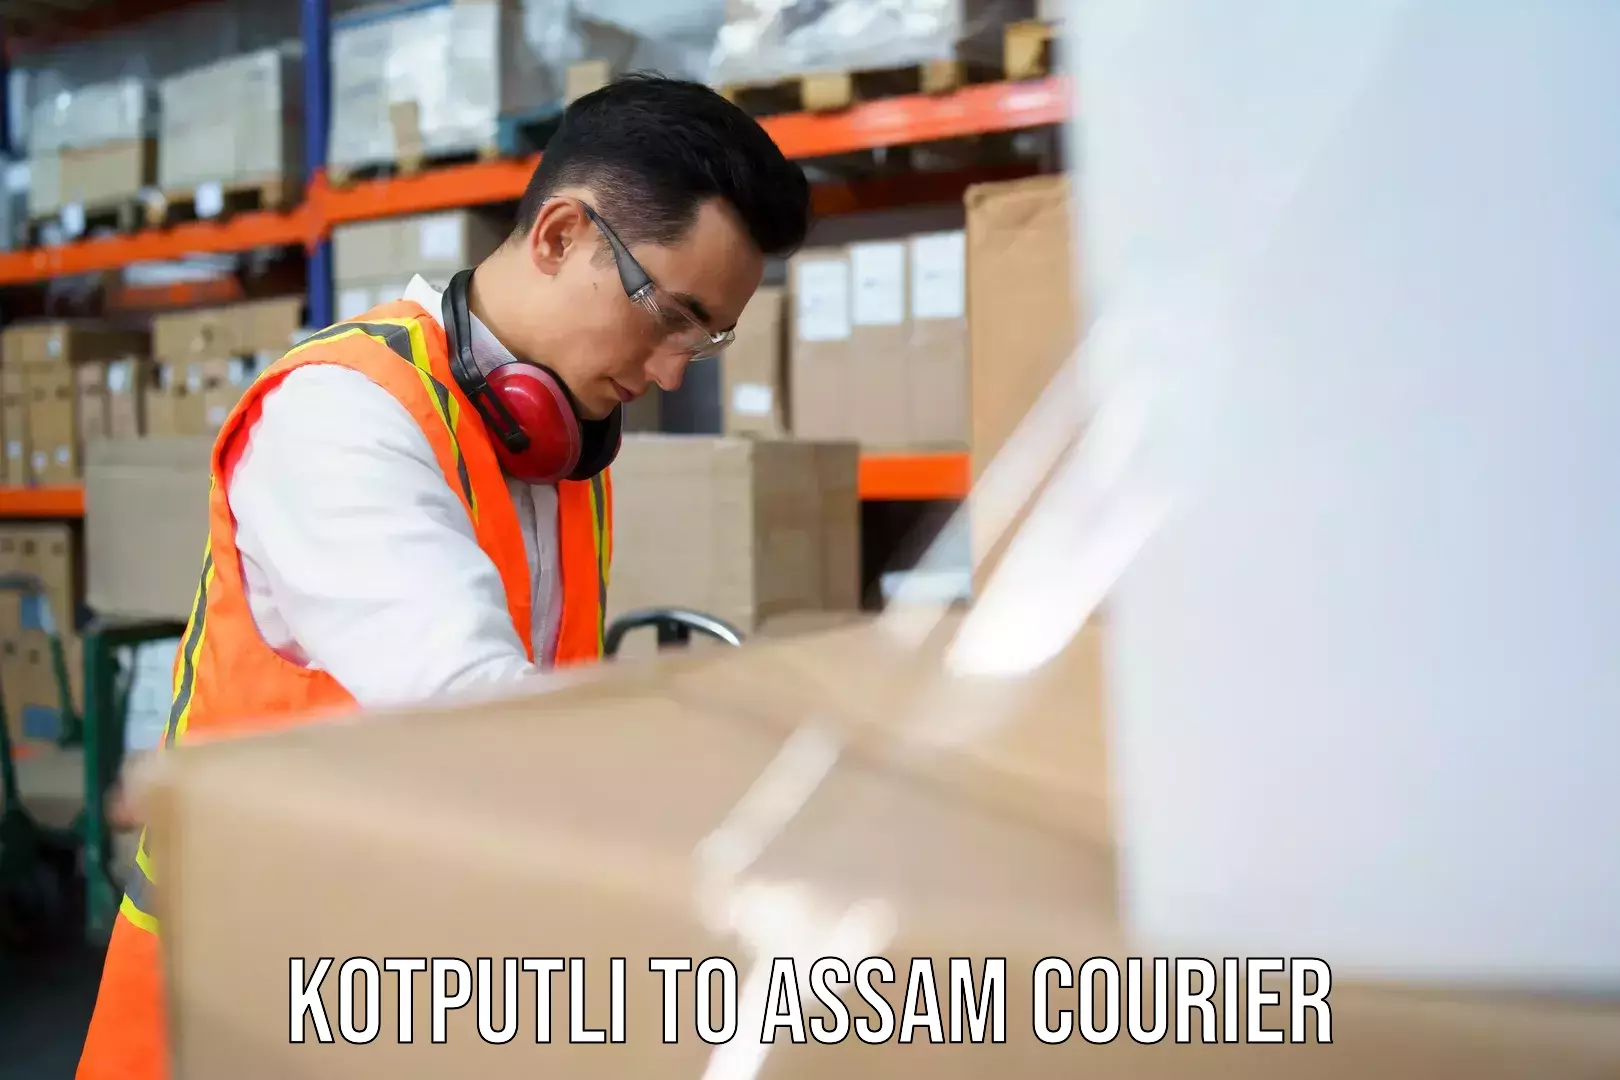 Courier service comparison Kotputli to Mayang